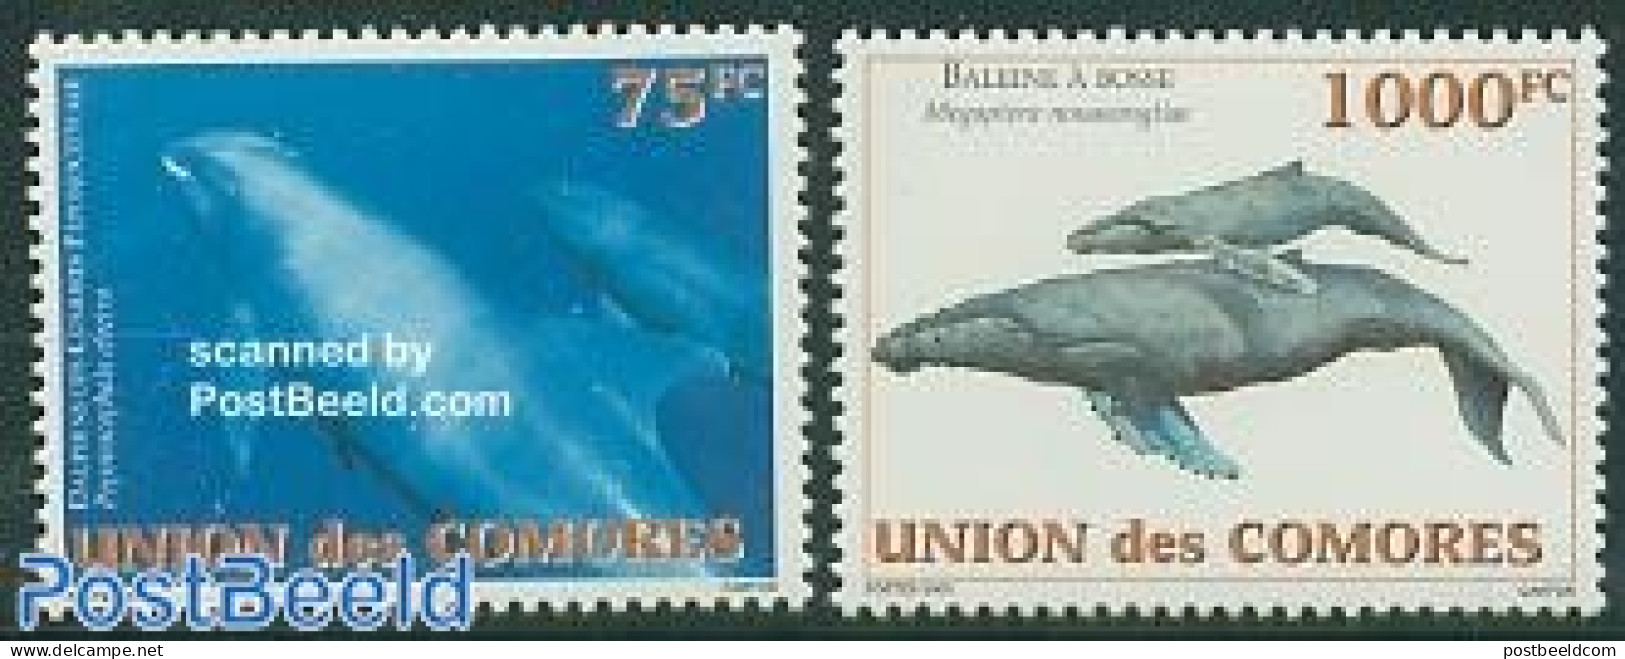 Comoros 2003 Whales & Dolphins 2v, Mint NH, Nature - Sea Mammals - Comores (1975-...)